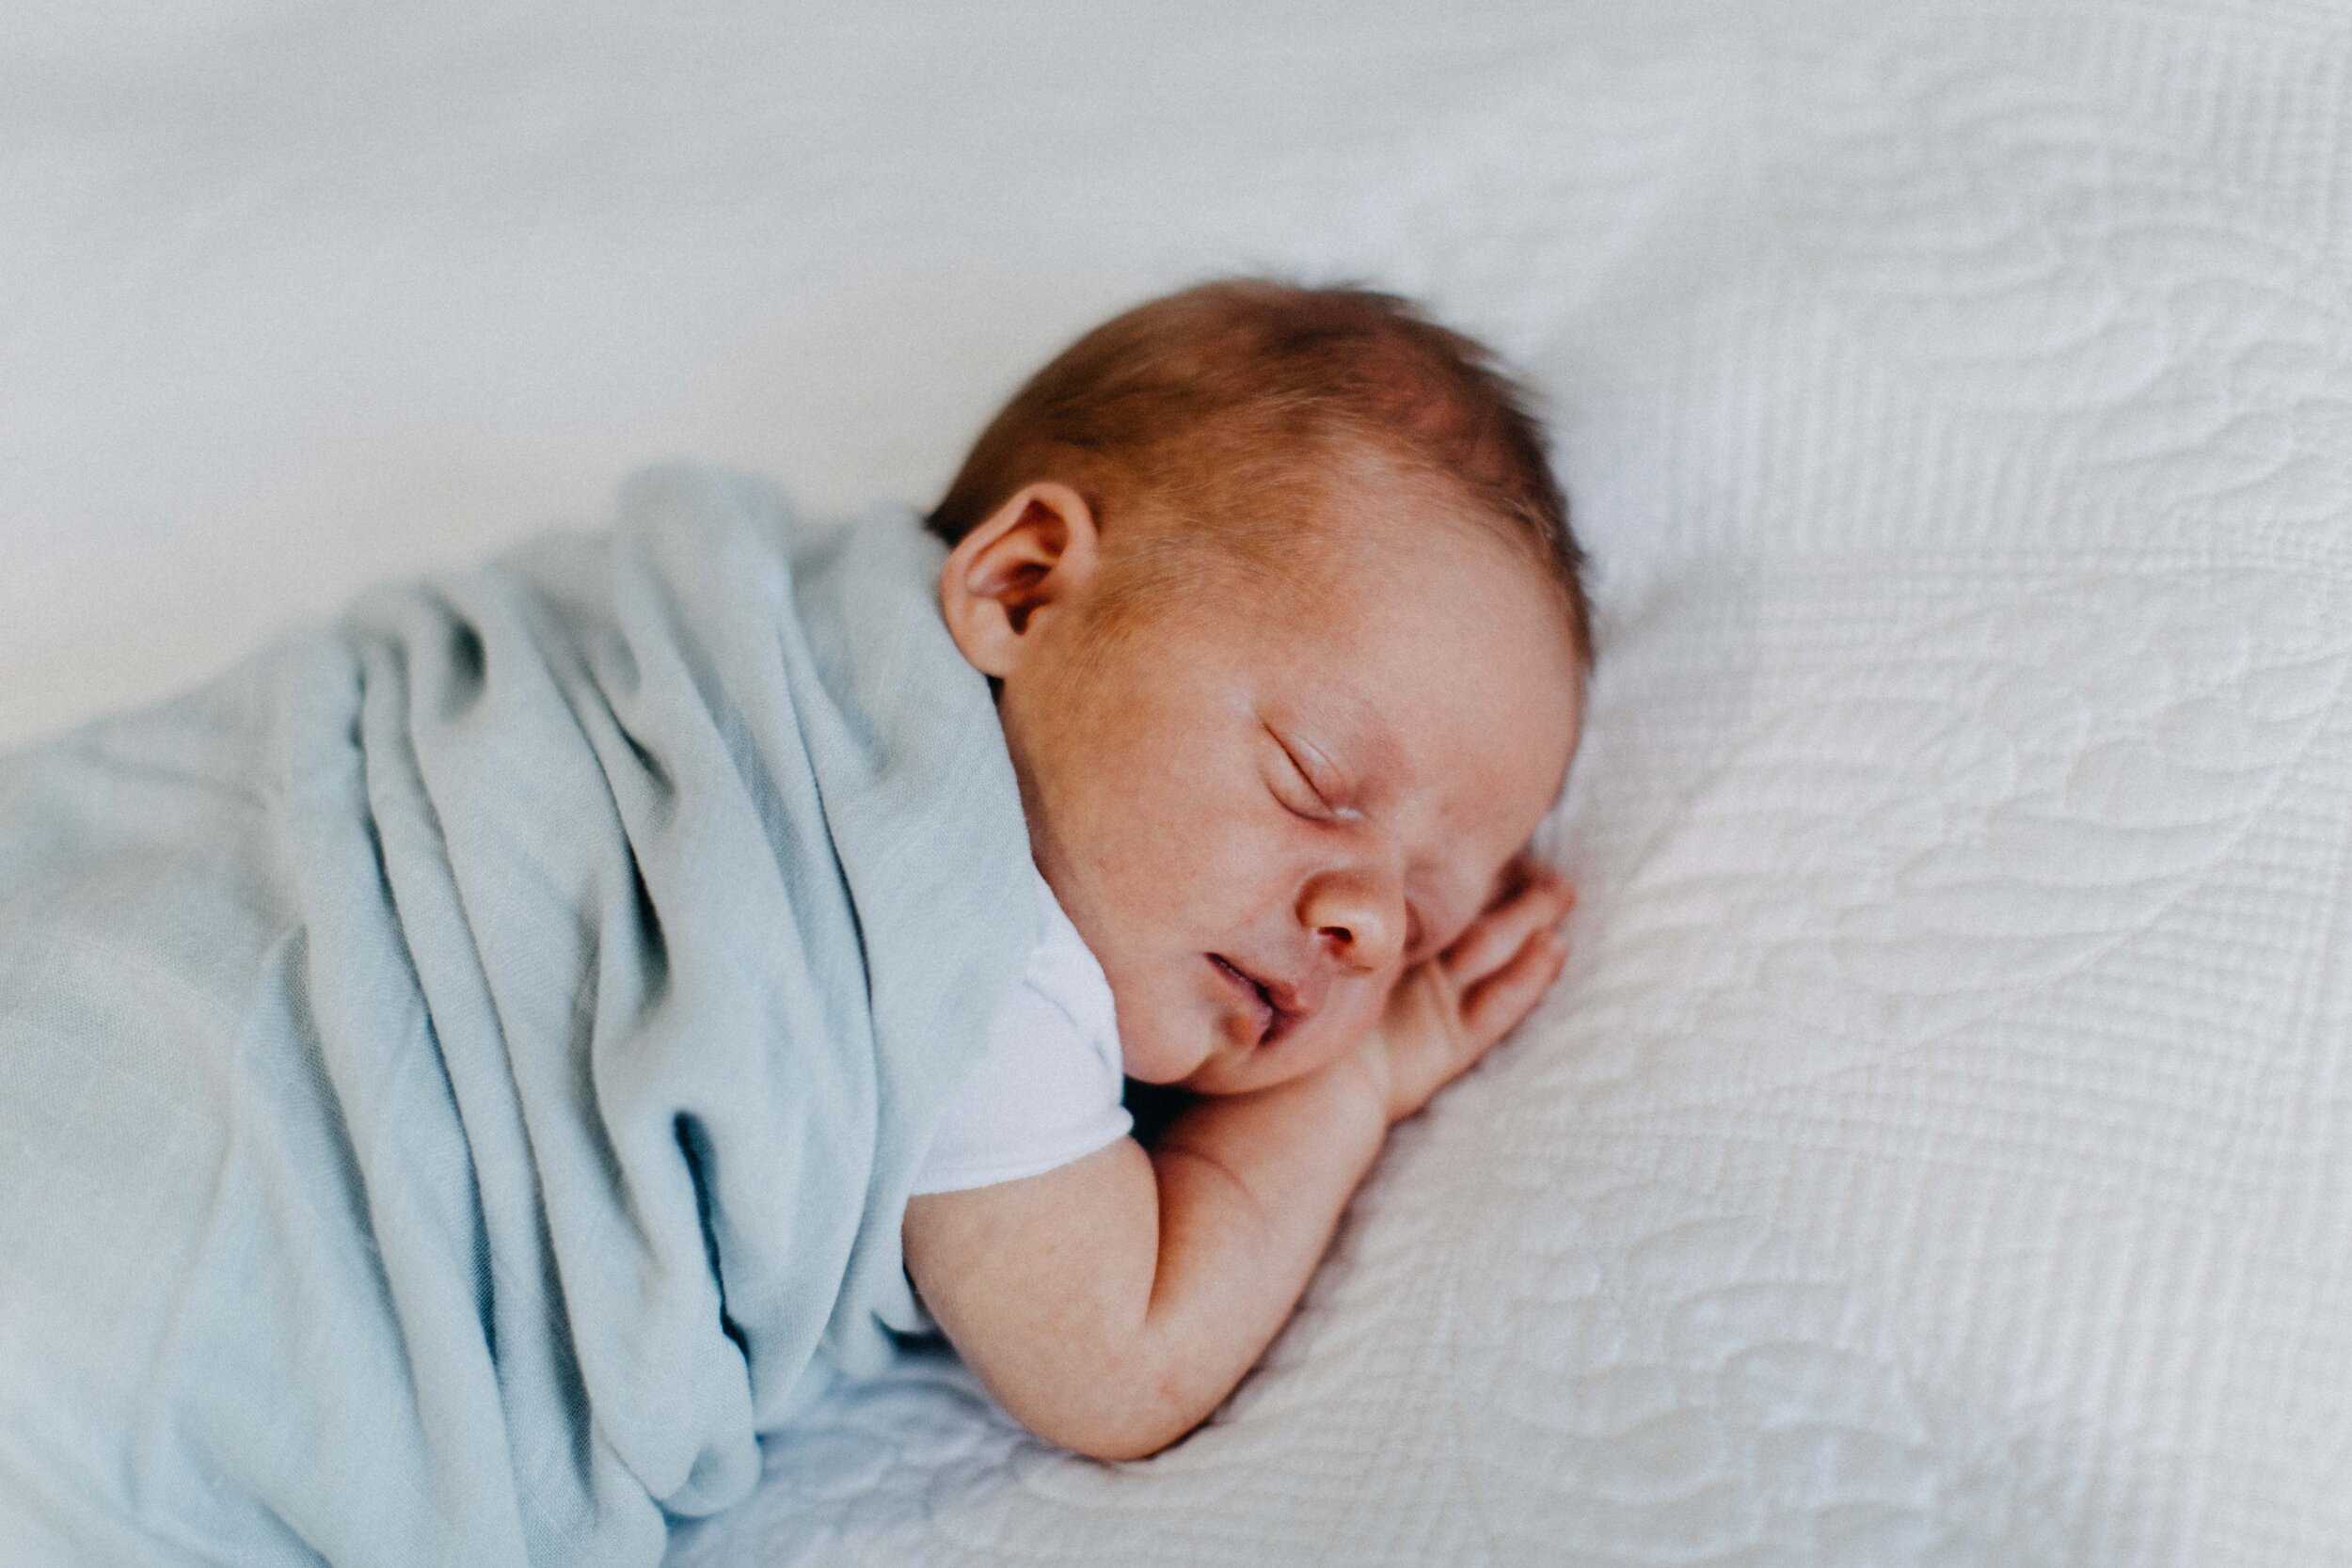 camden-newborn-lifestyle-photography-www.emilyobrienphotography.net-knox-23.jpg